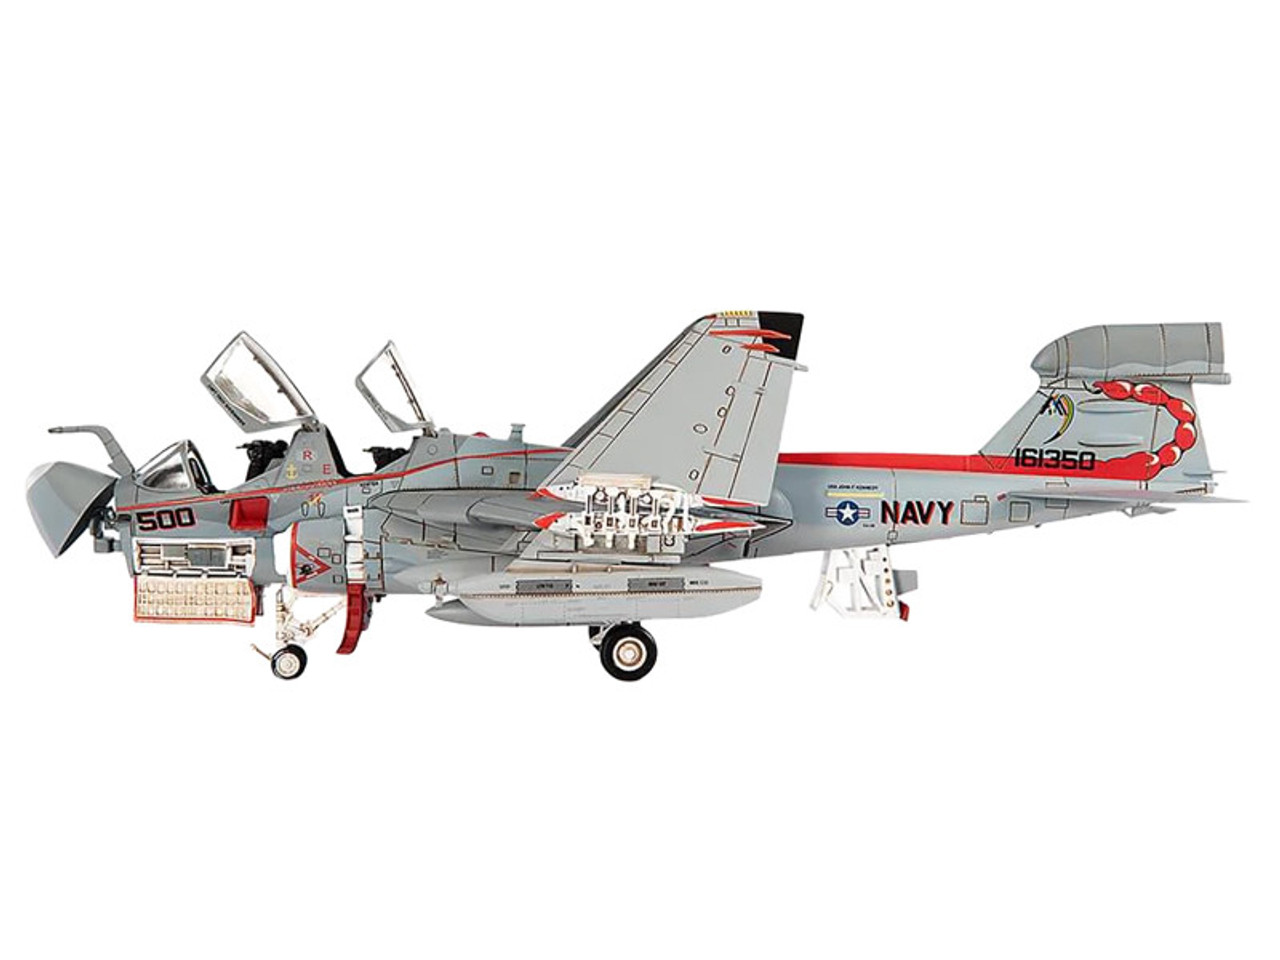 Northrop Grumman EA-6B Prowler Attack Aircraft "VAQ-132 Scorpions USS John F Kennedy" (2005) United States Navy 1/72 Diecast Model by JC Wings